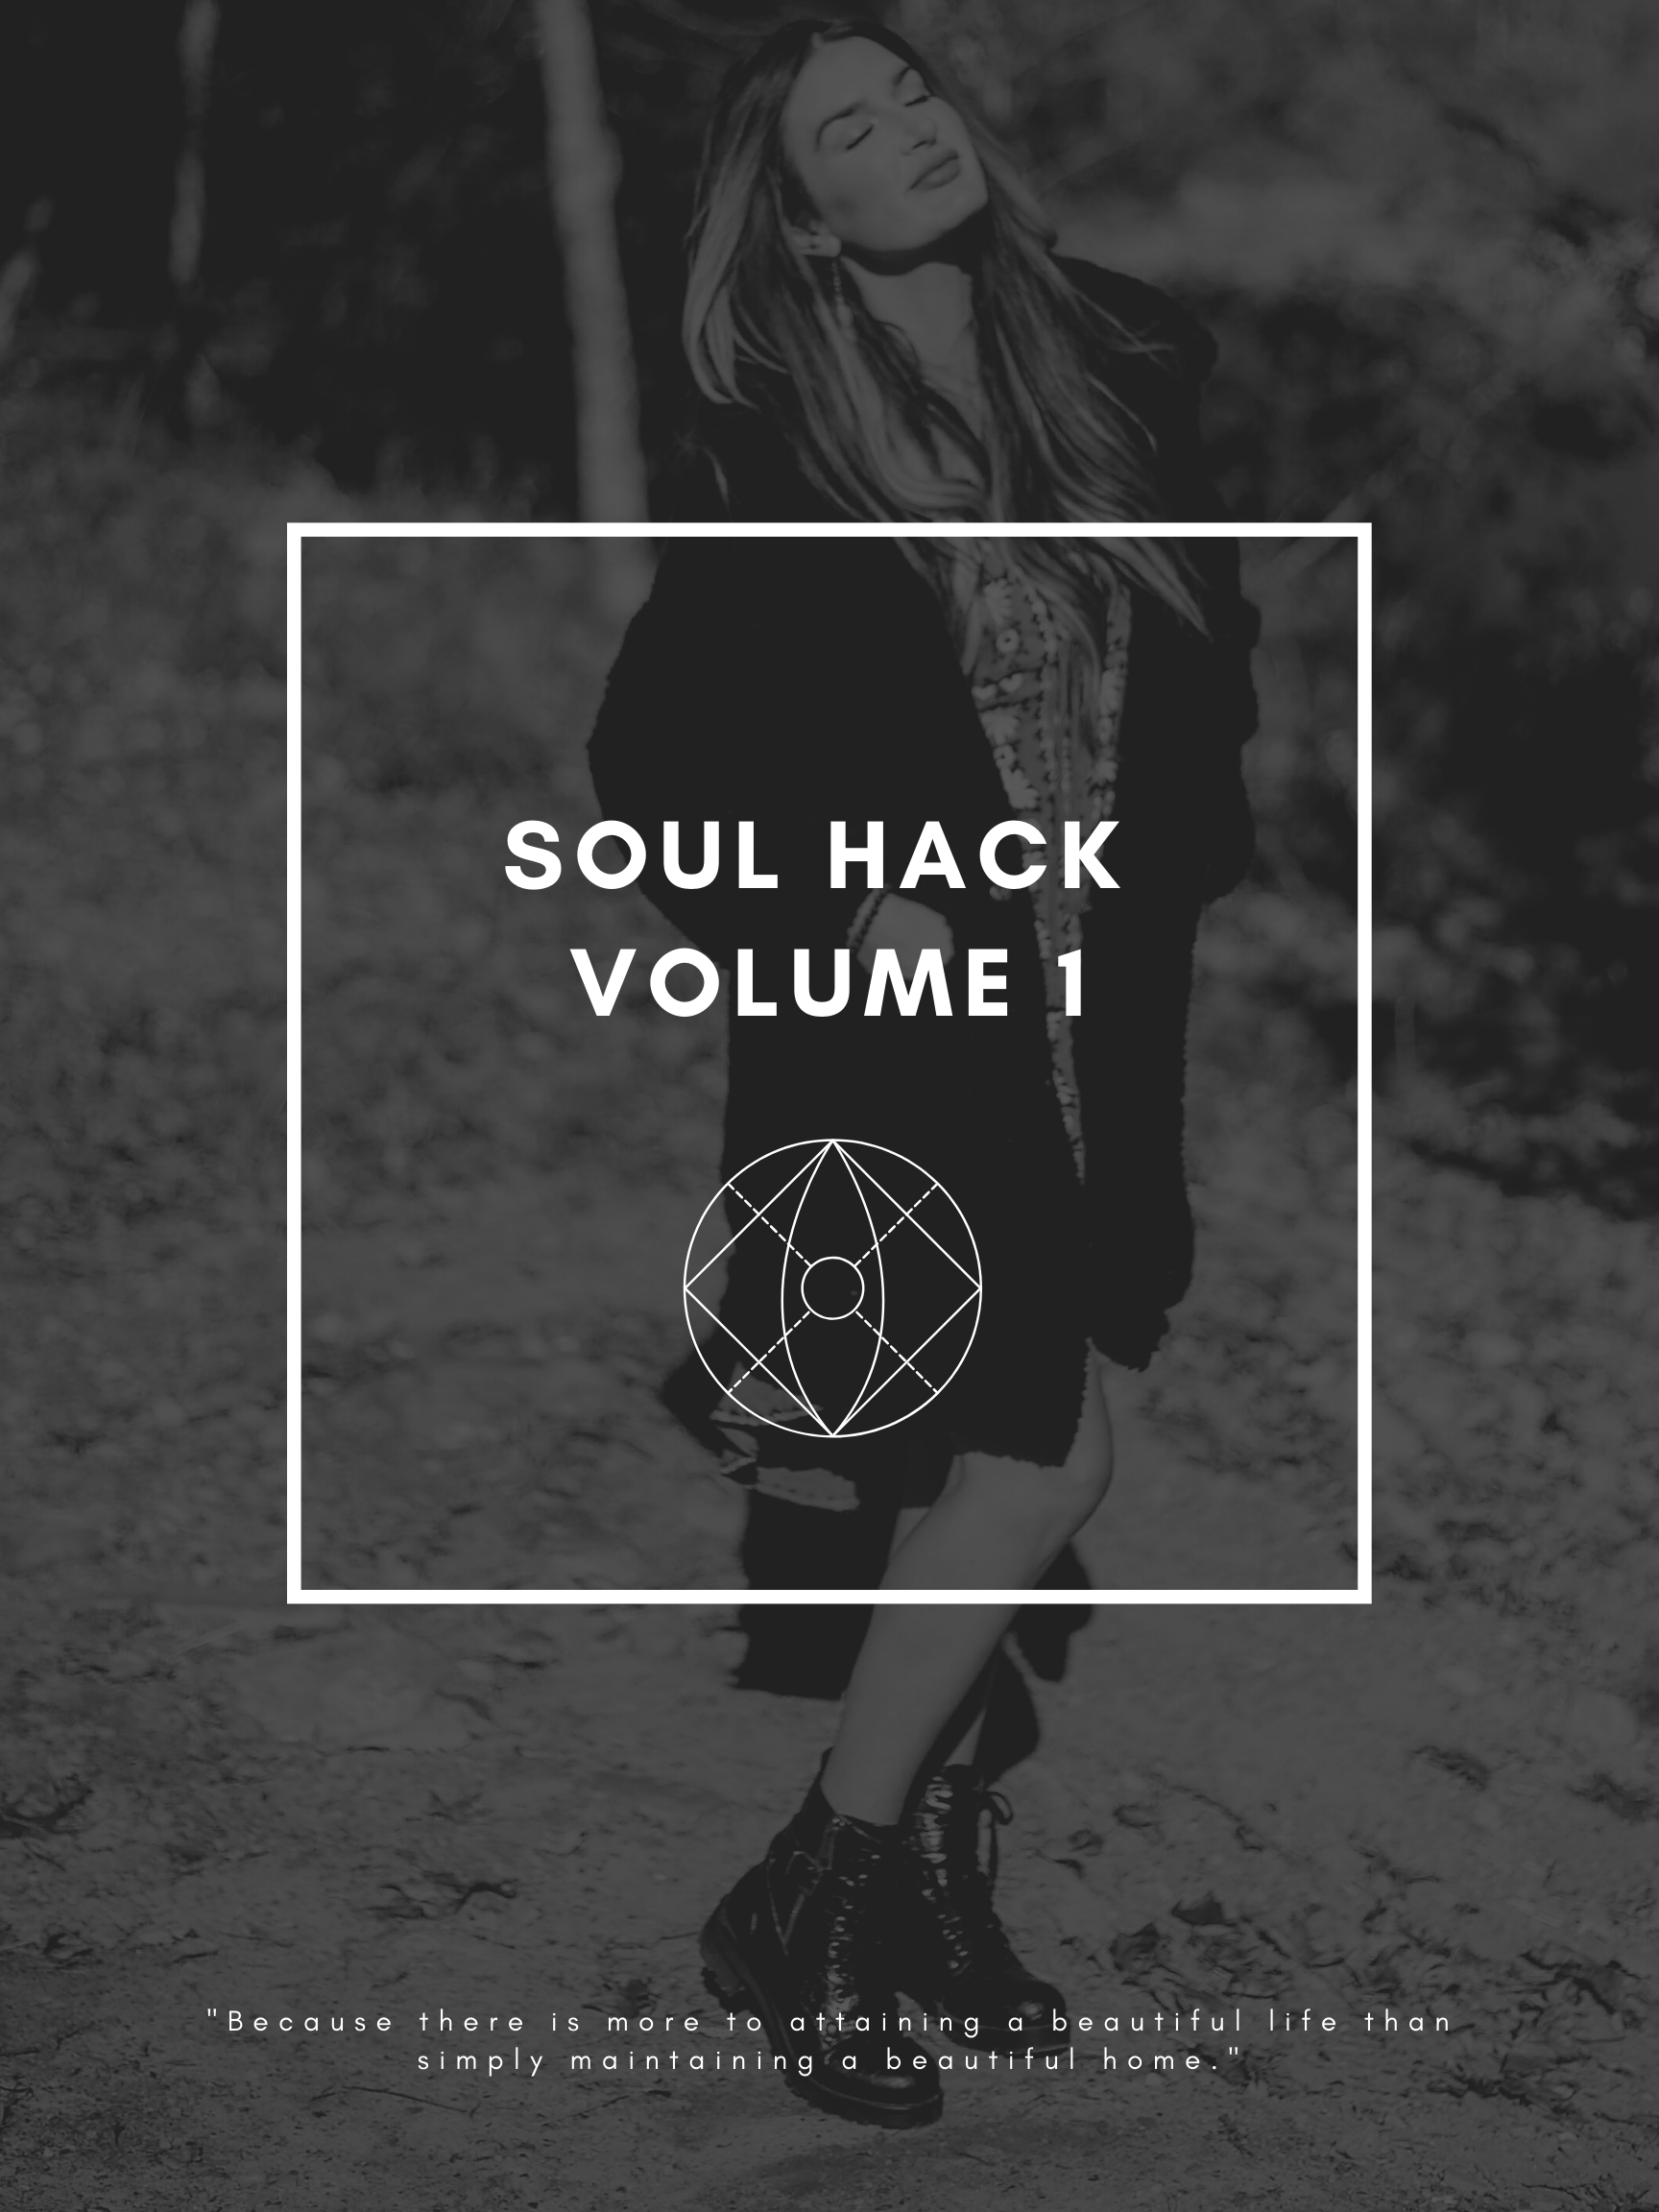 Introducing My New Blog Series- Soul Hacks